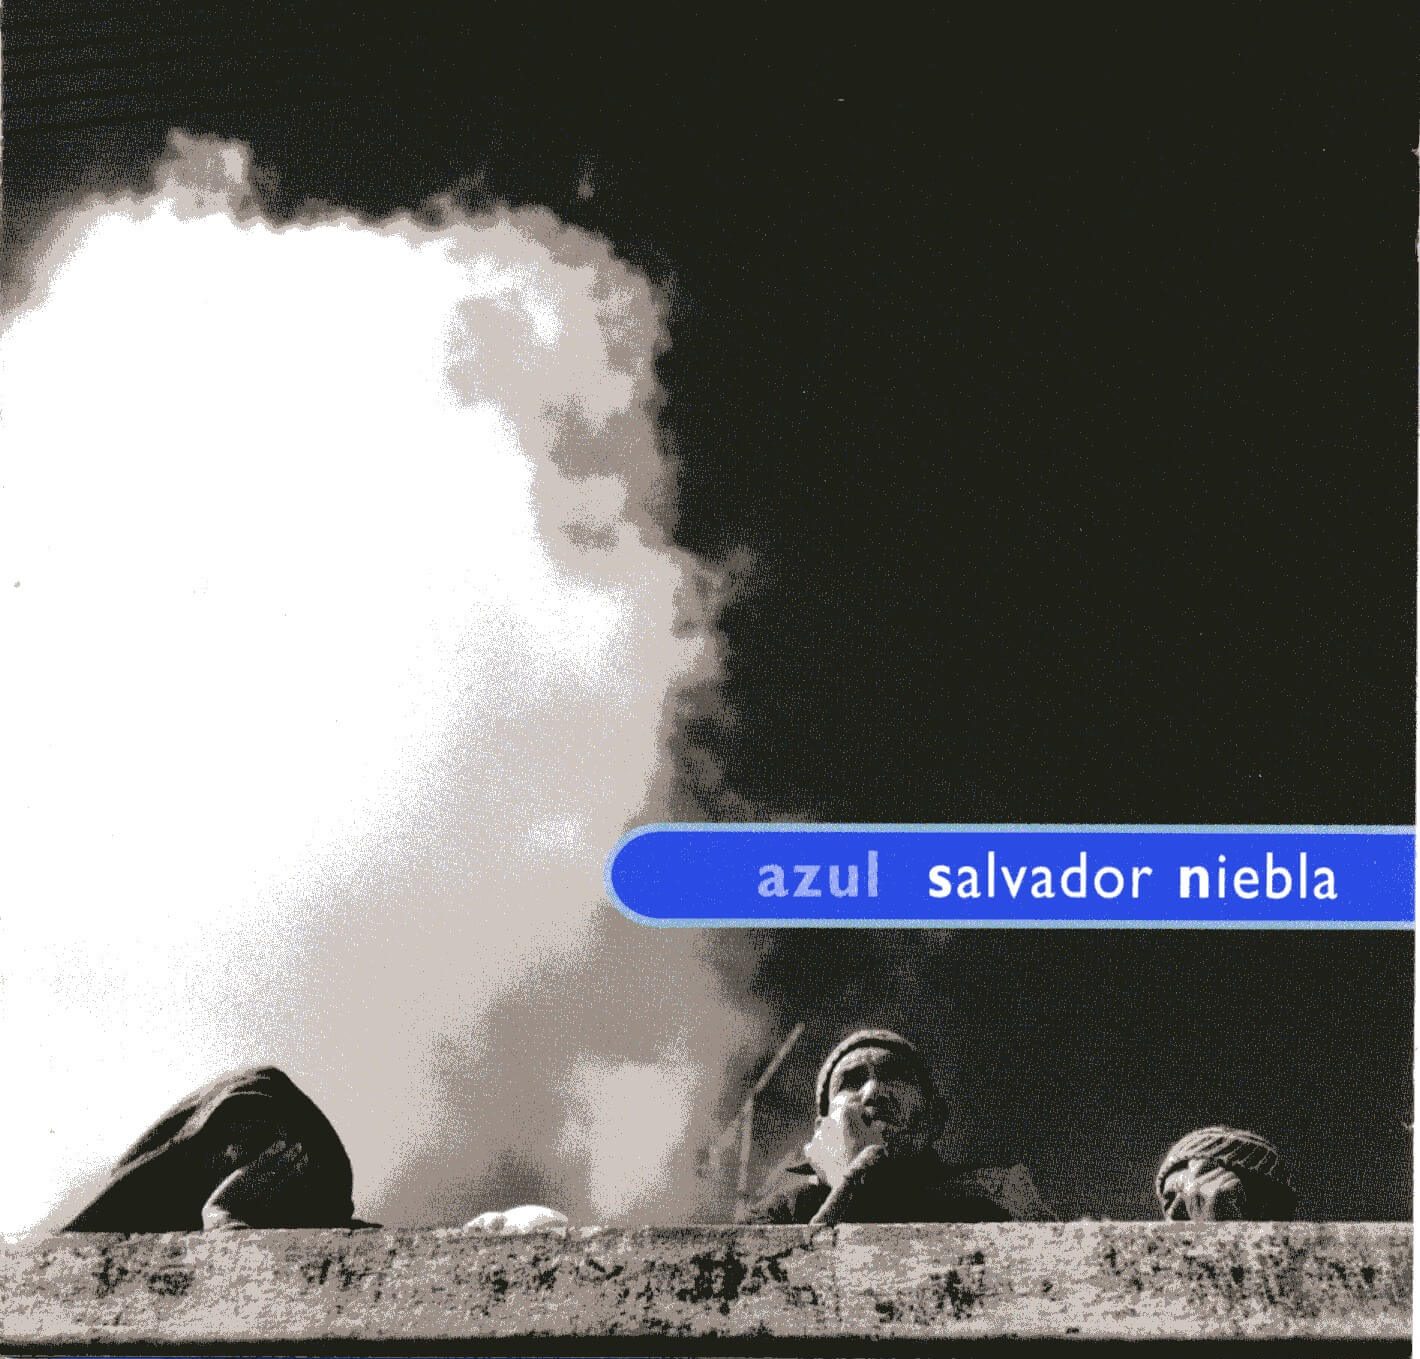 SALVADOR NIEBLA | AZUL